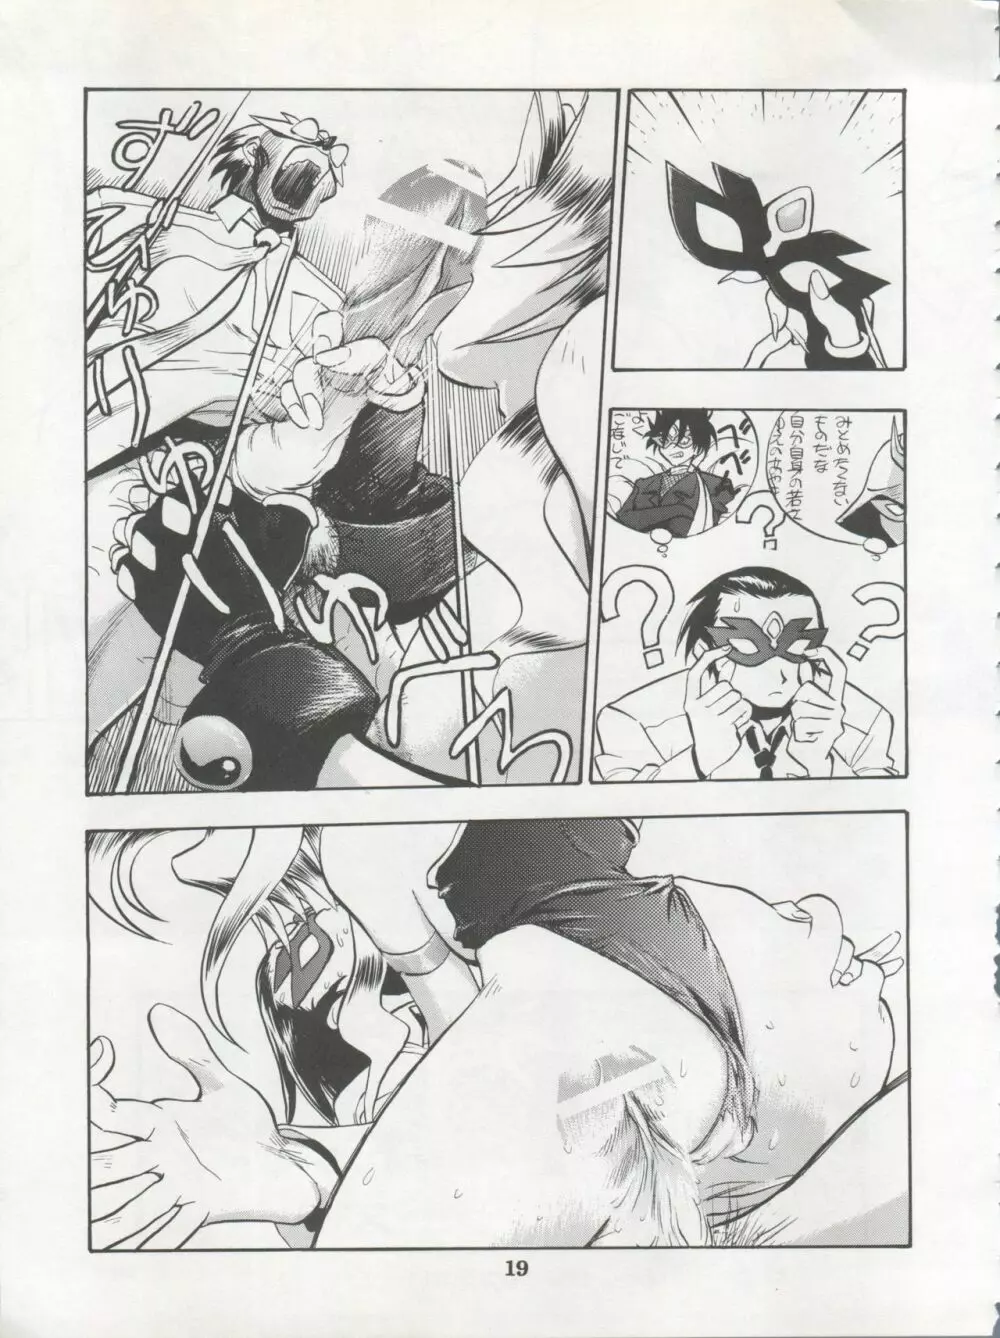 1998 SUMMER 電撃犬王 - page21